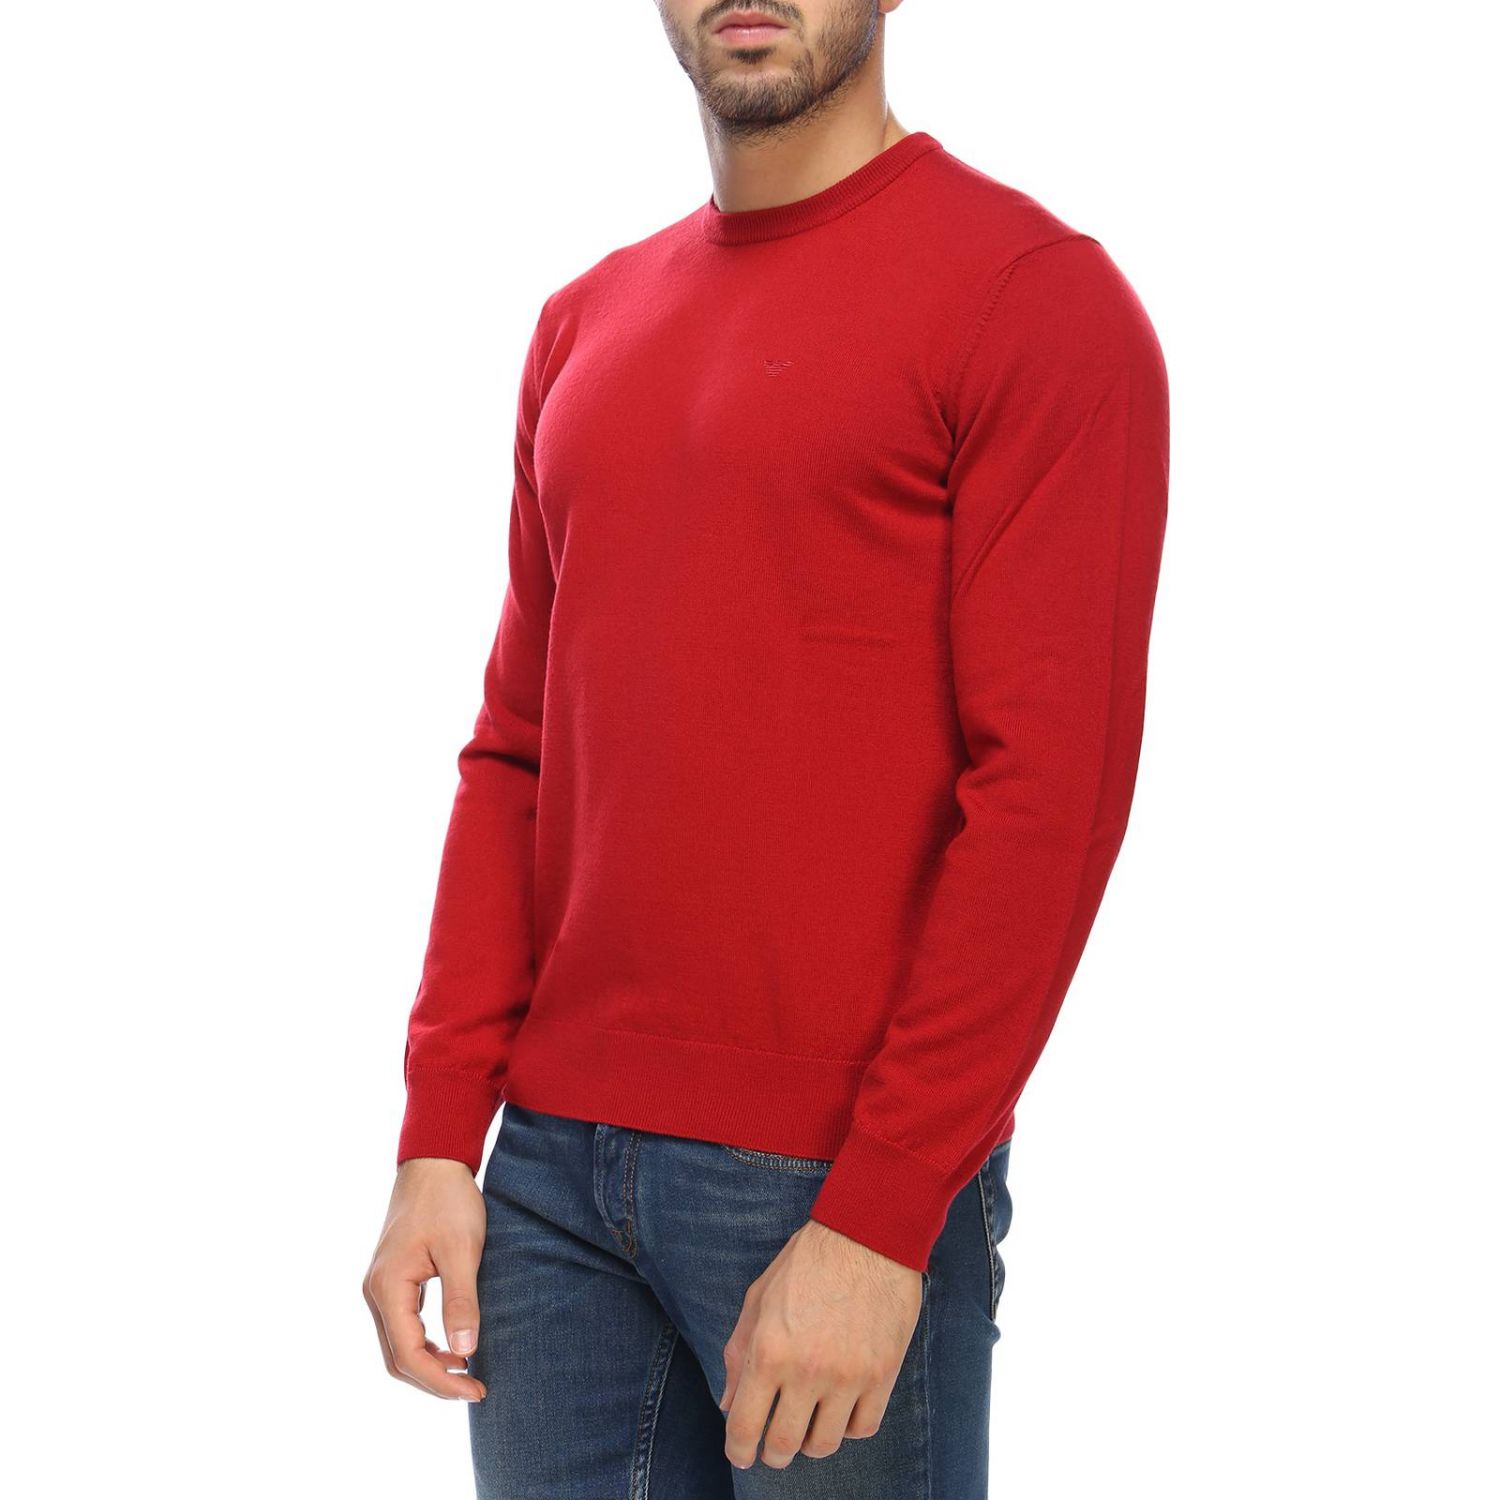 Emporio Armani Outlet: Sweater men | Sweater Emporio Armani Men Red ...